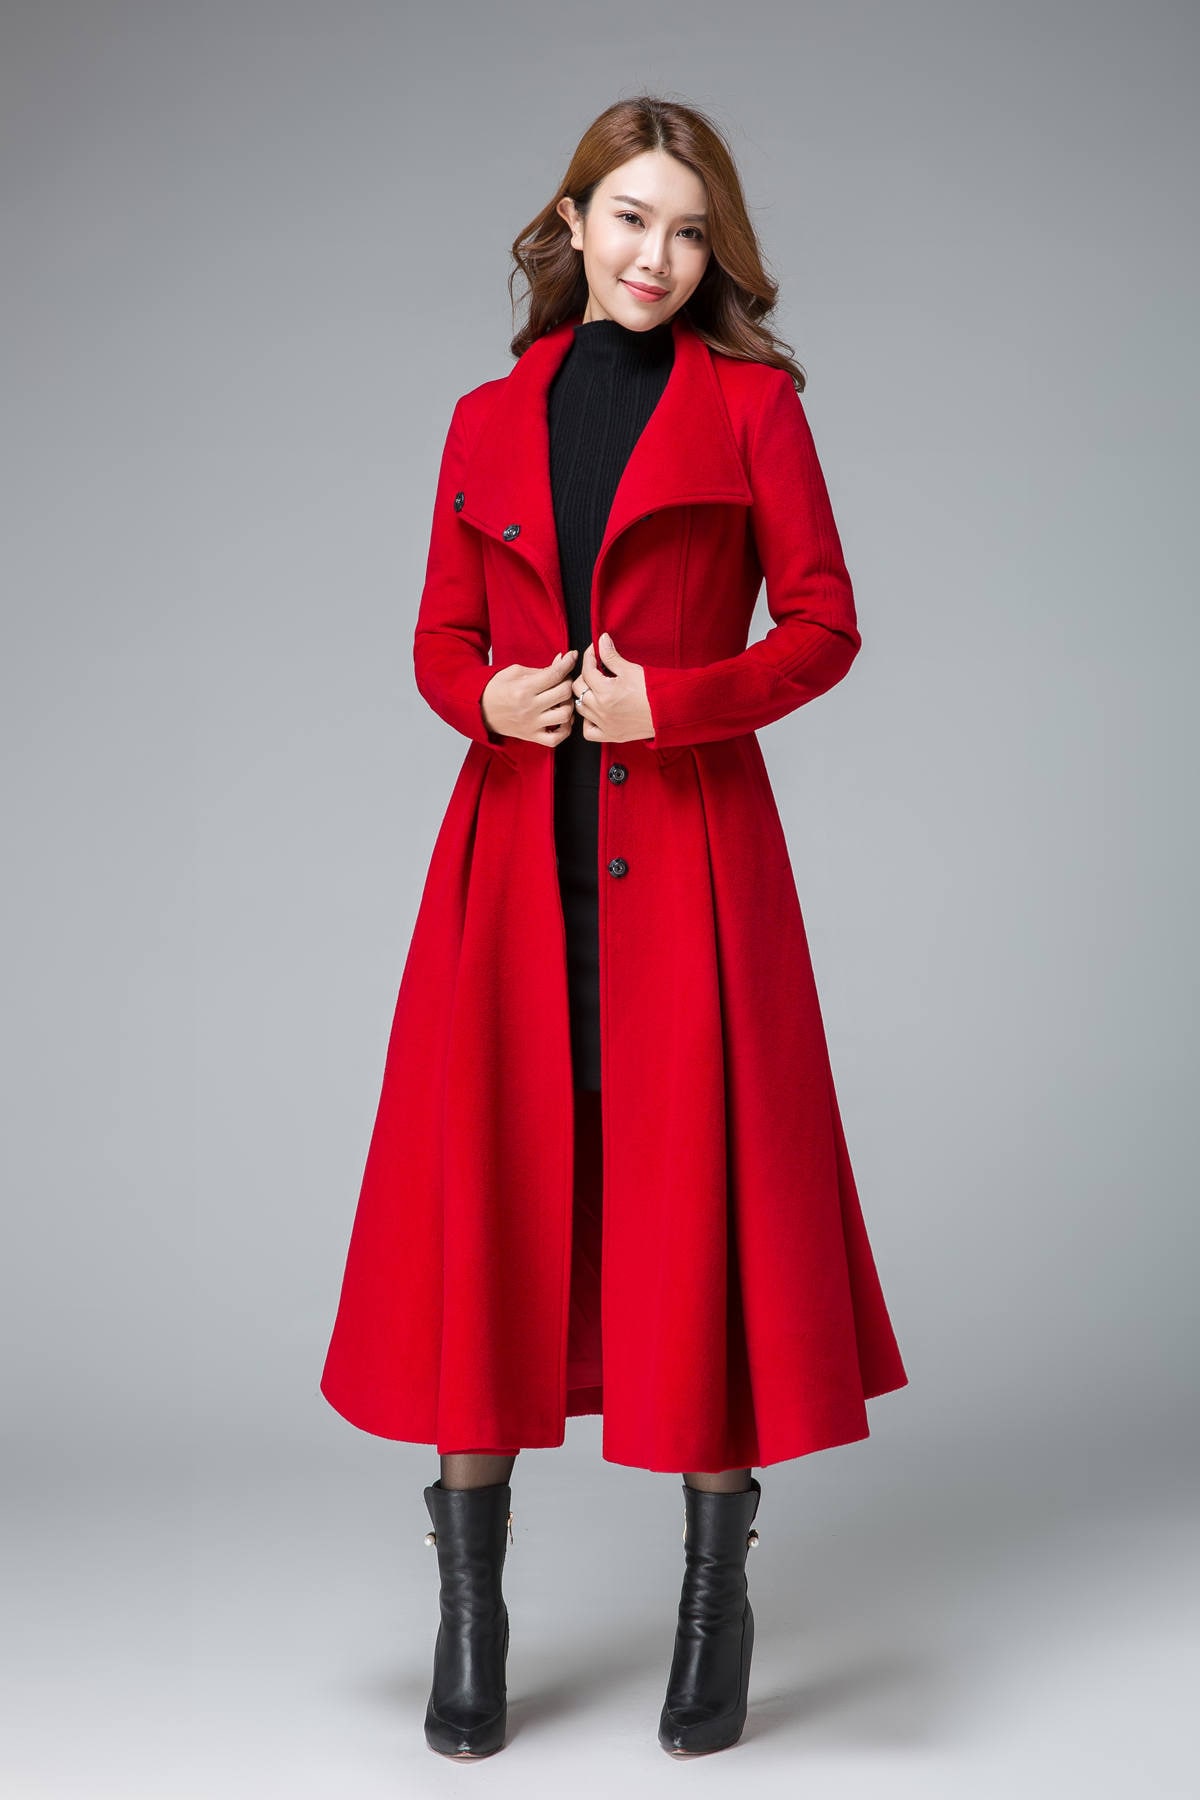 Coats for women red winter coat asymmetrical coat pleated | Etsy